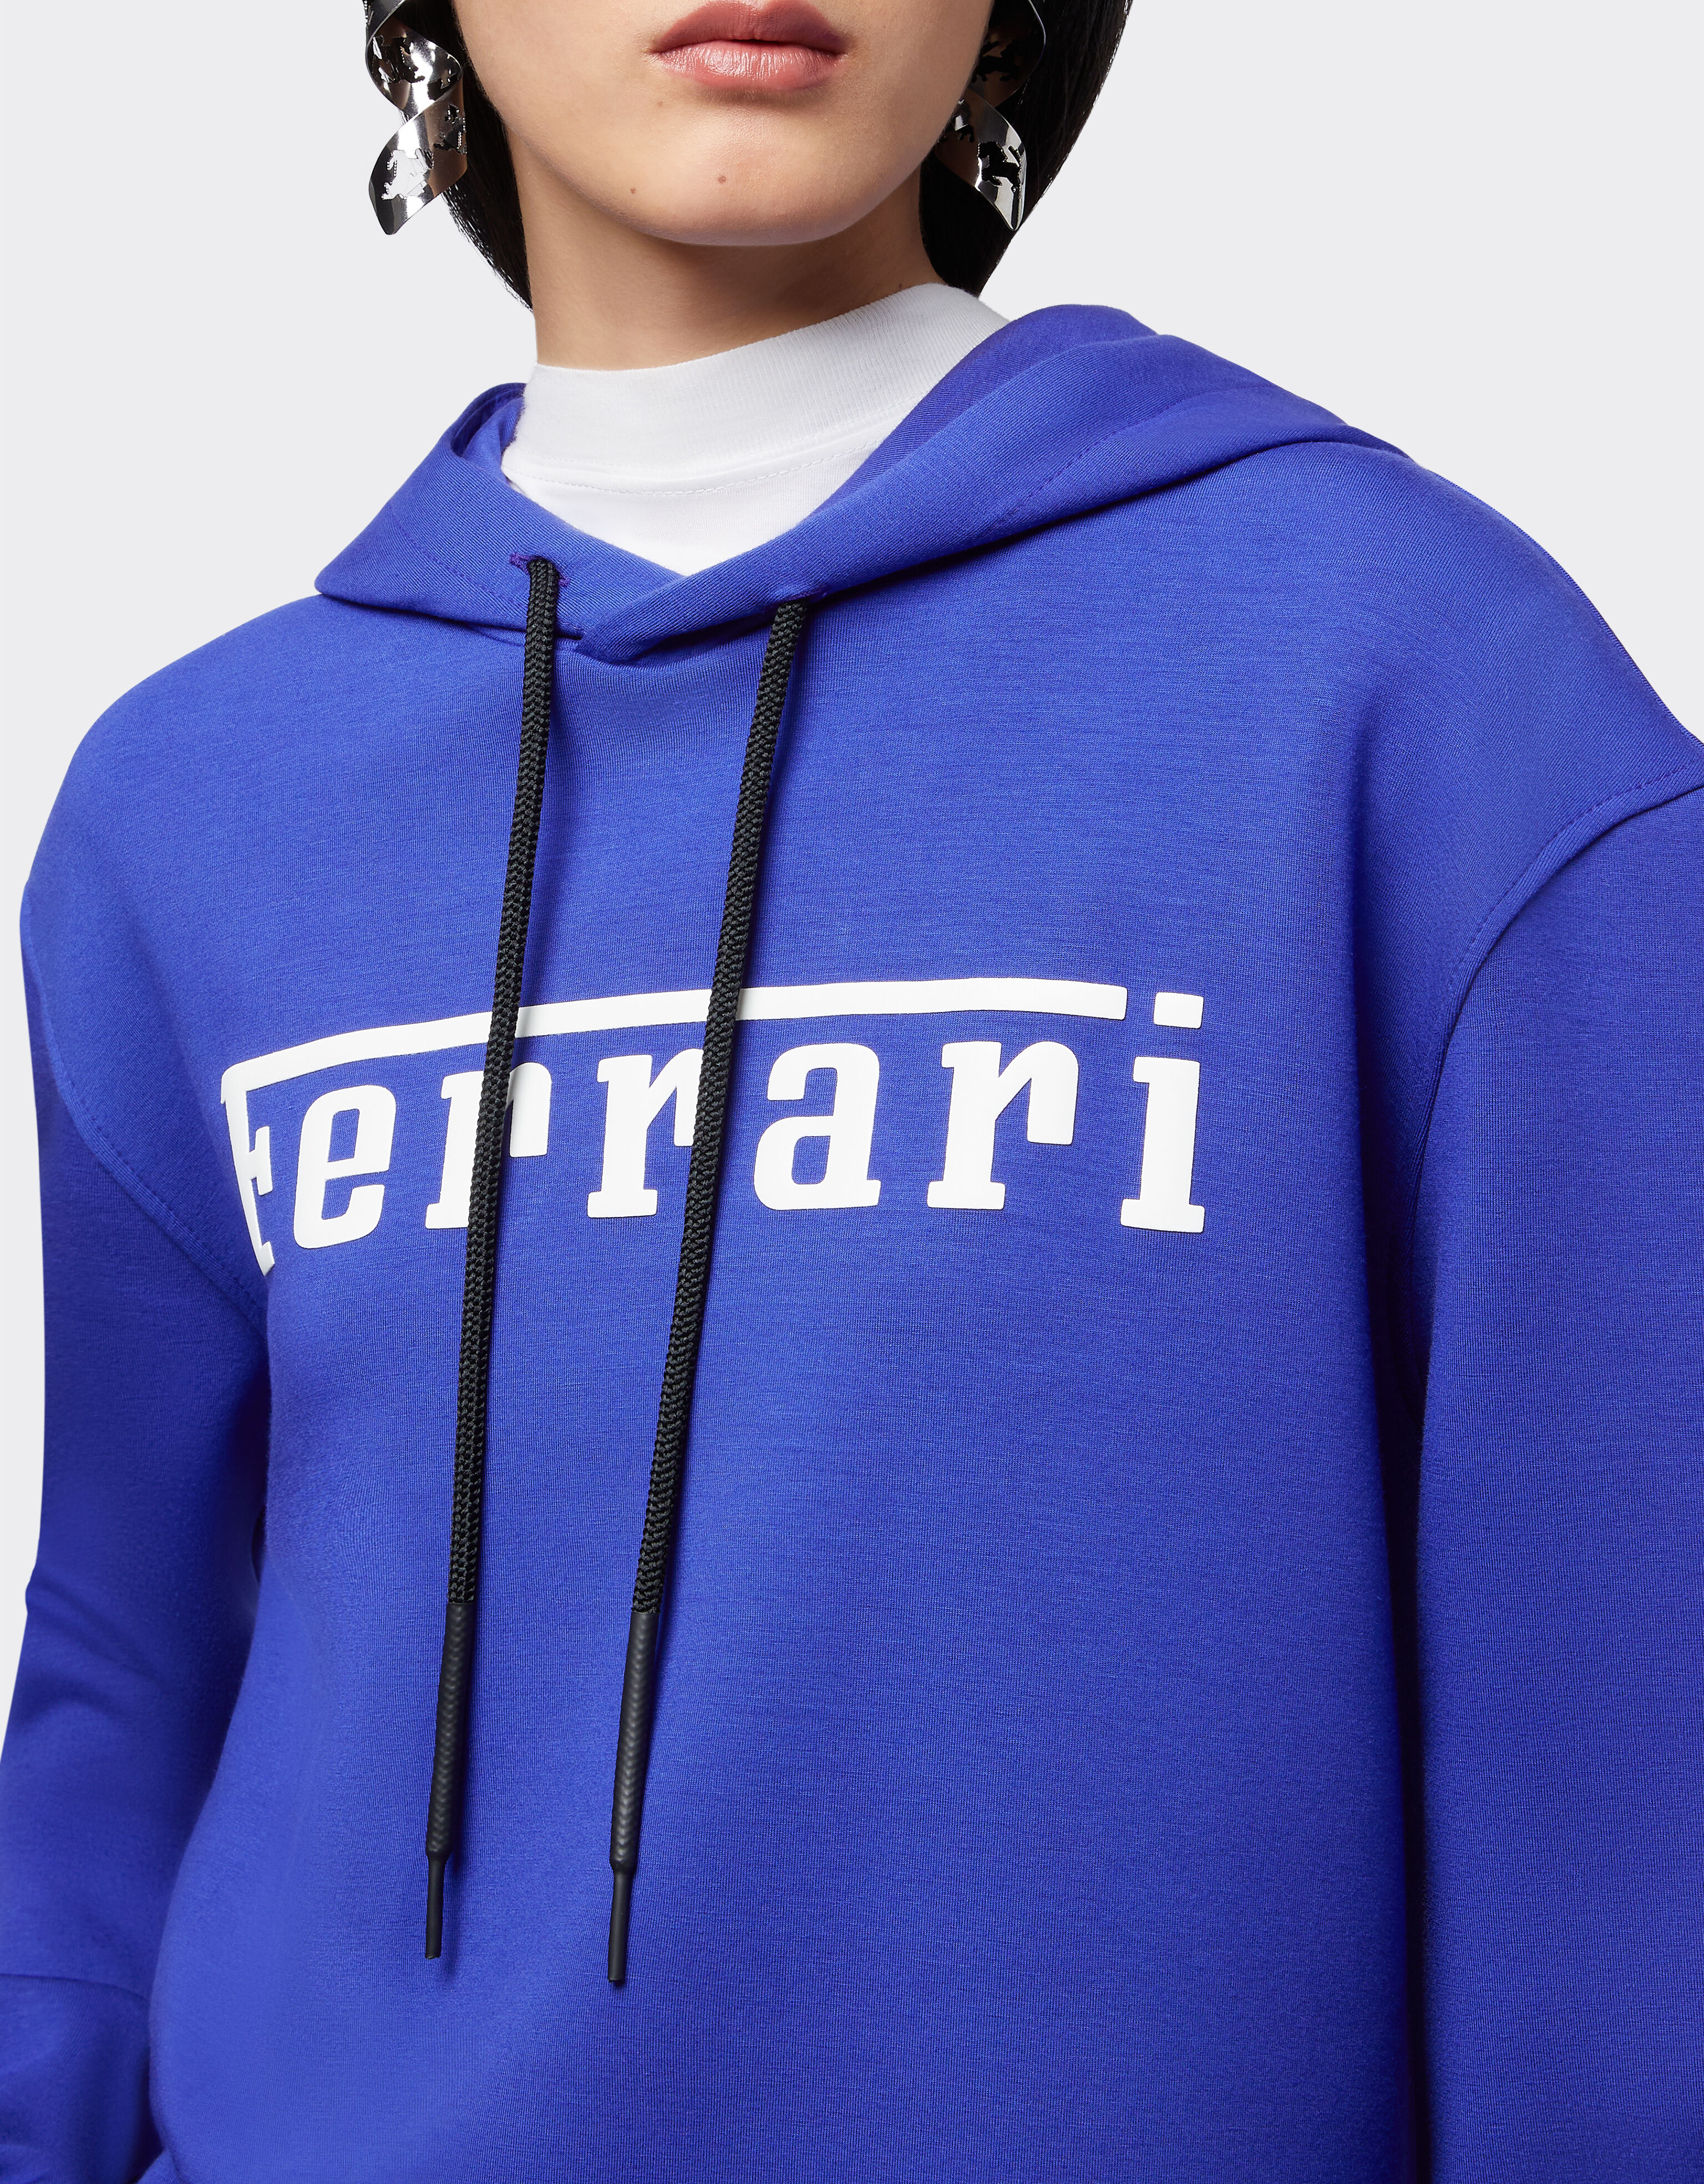 Ferrari Scuba knit sweatshirt with contrast Ferrari logo Antique Blue 47819f